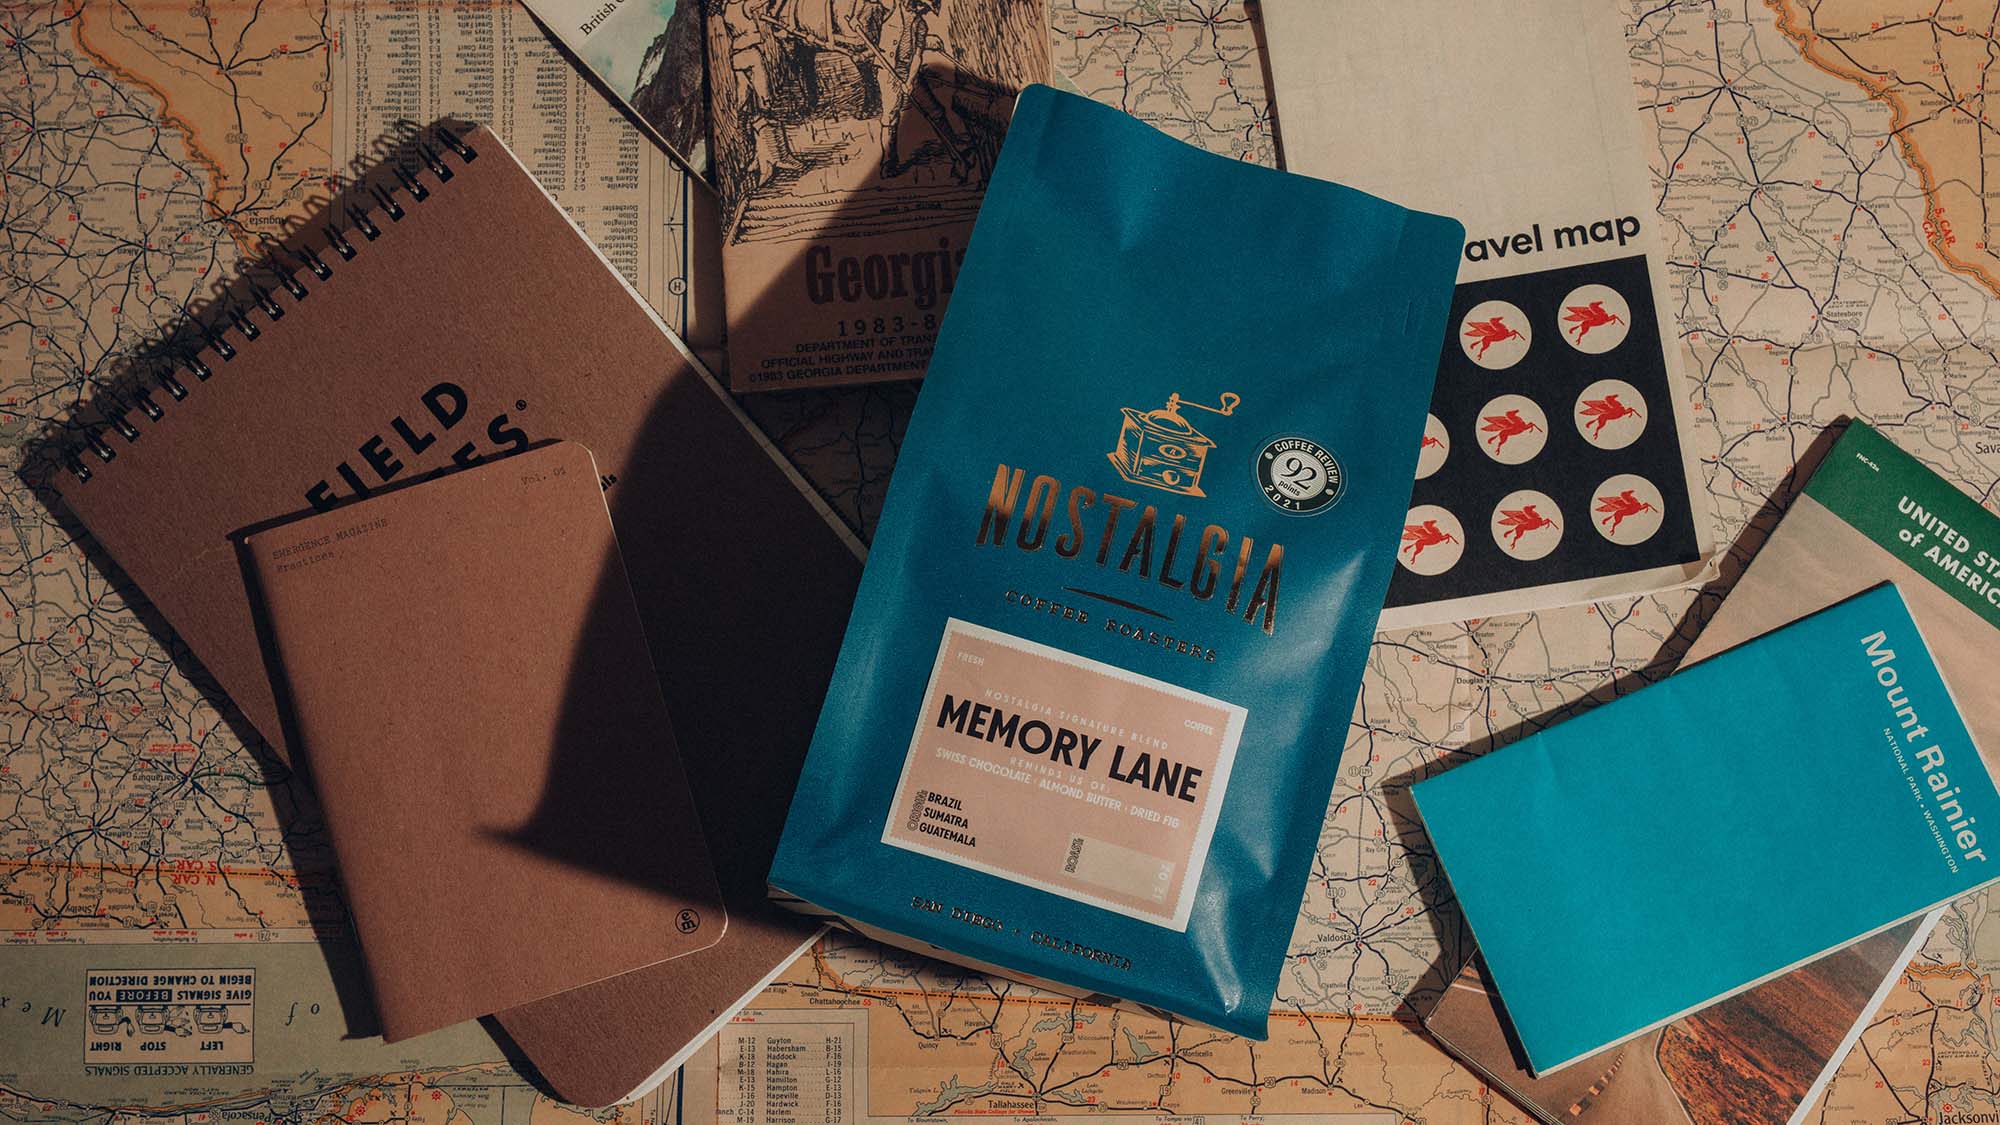 Bag of Memory Lane on Travel Maps